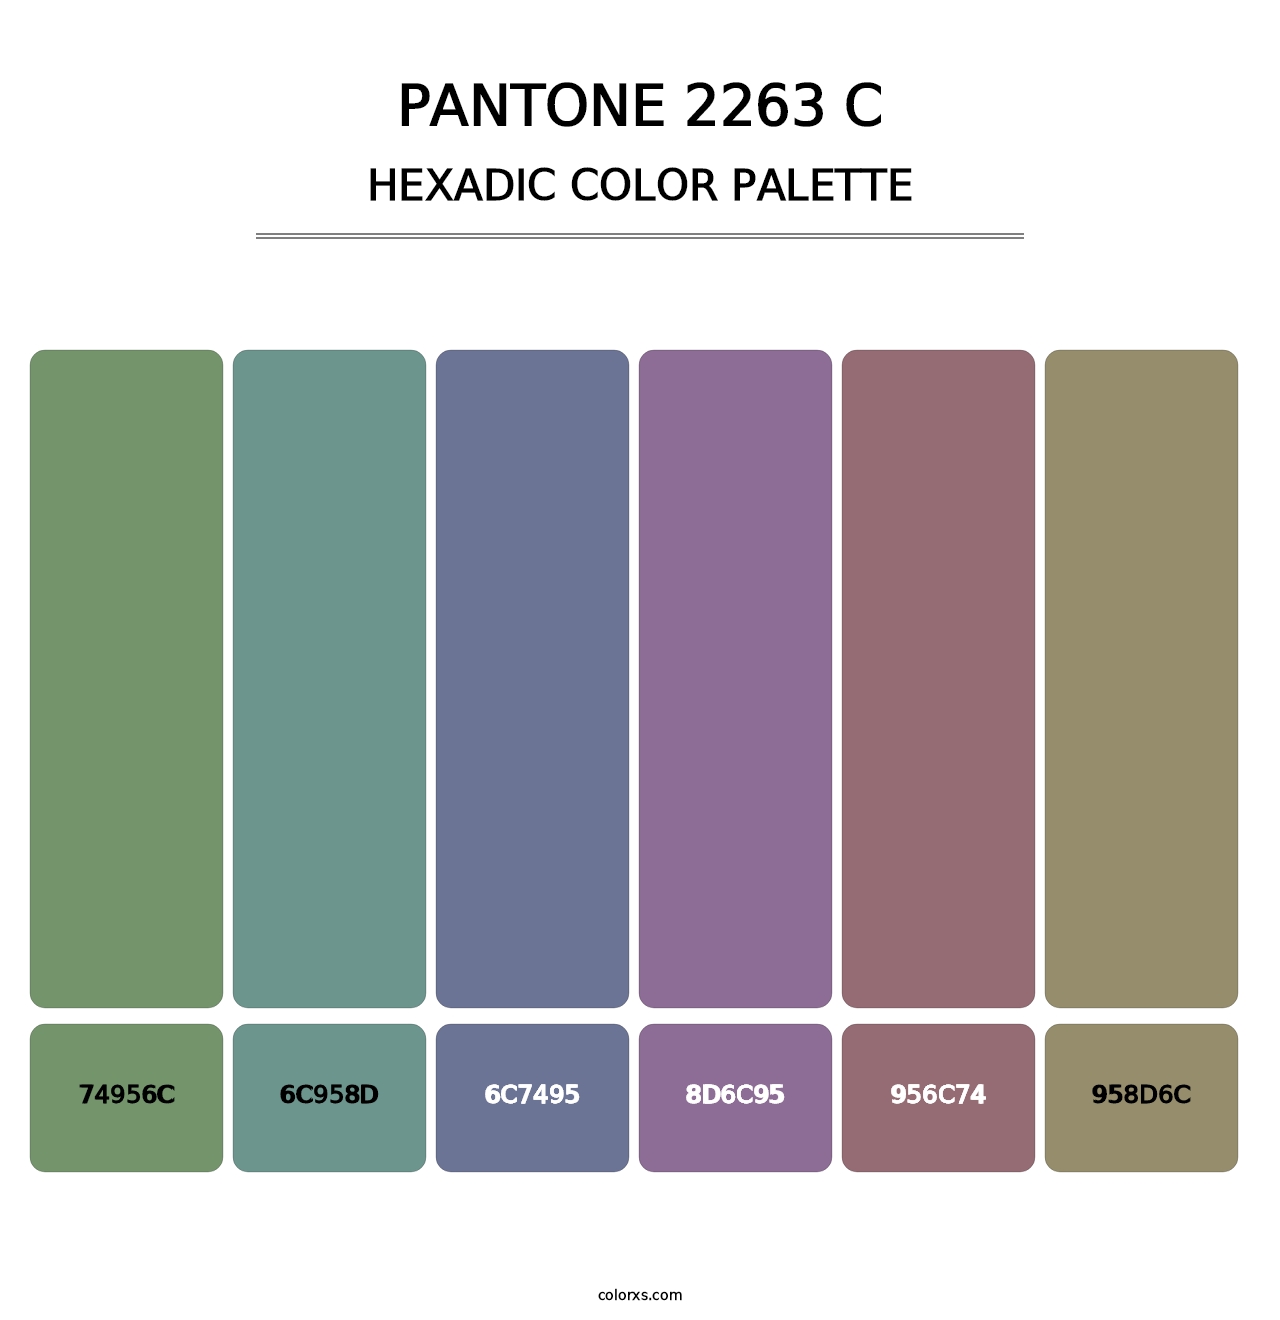 PANTONE 2263 C - Hexadic Color Palette